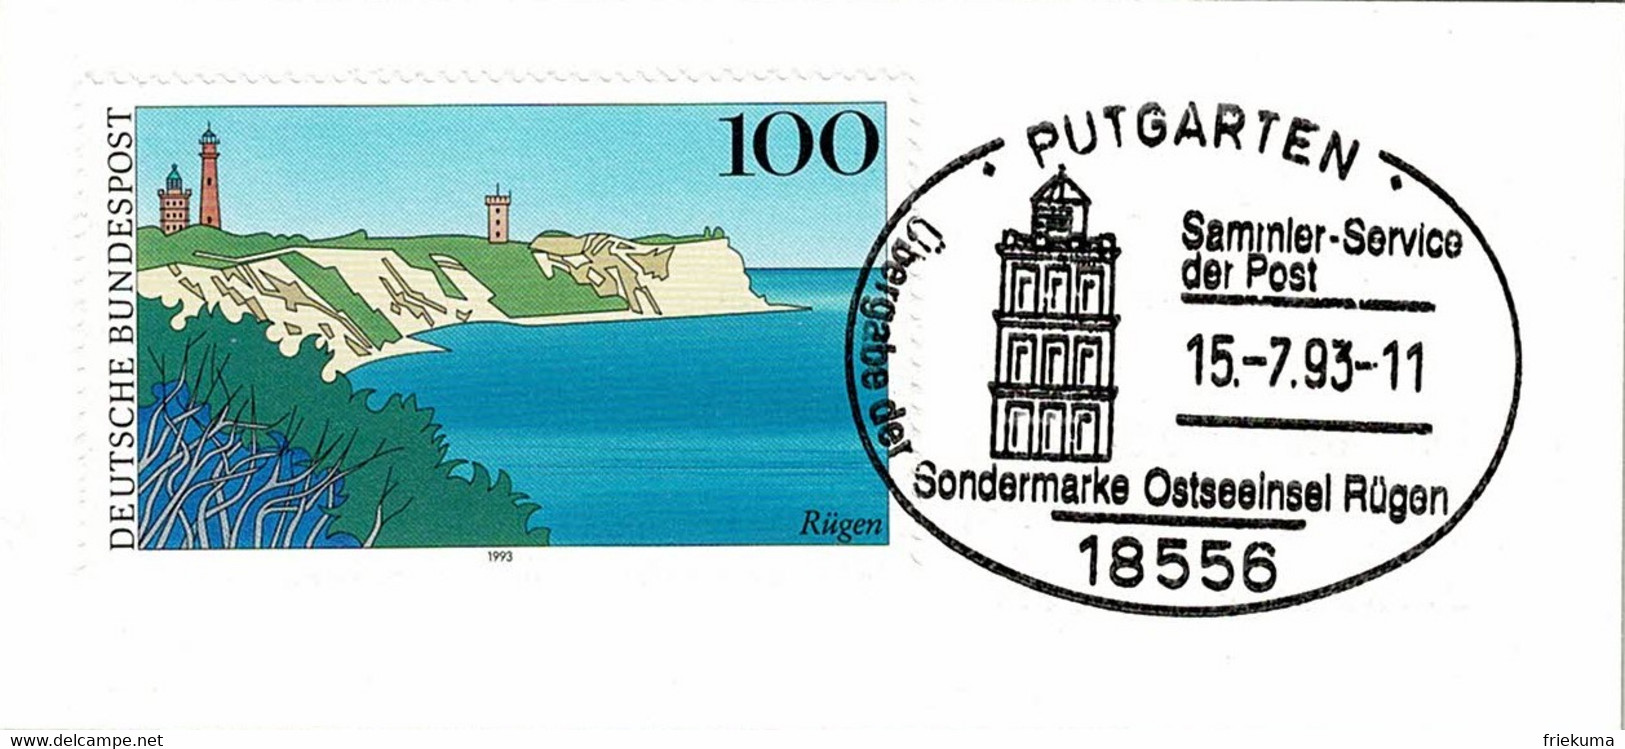 Deutsche Bundespost 1993, Sonderstempel Ostseeinsel Rügen Putgarten - Islands